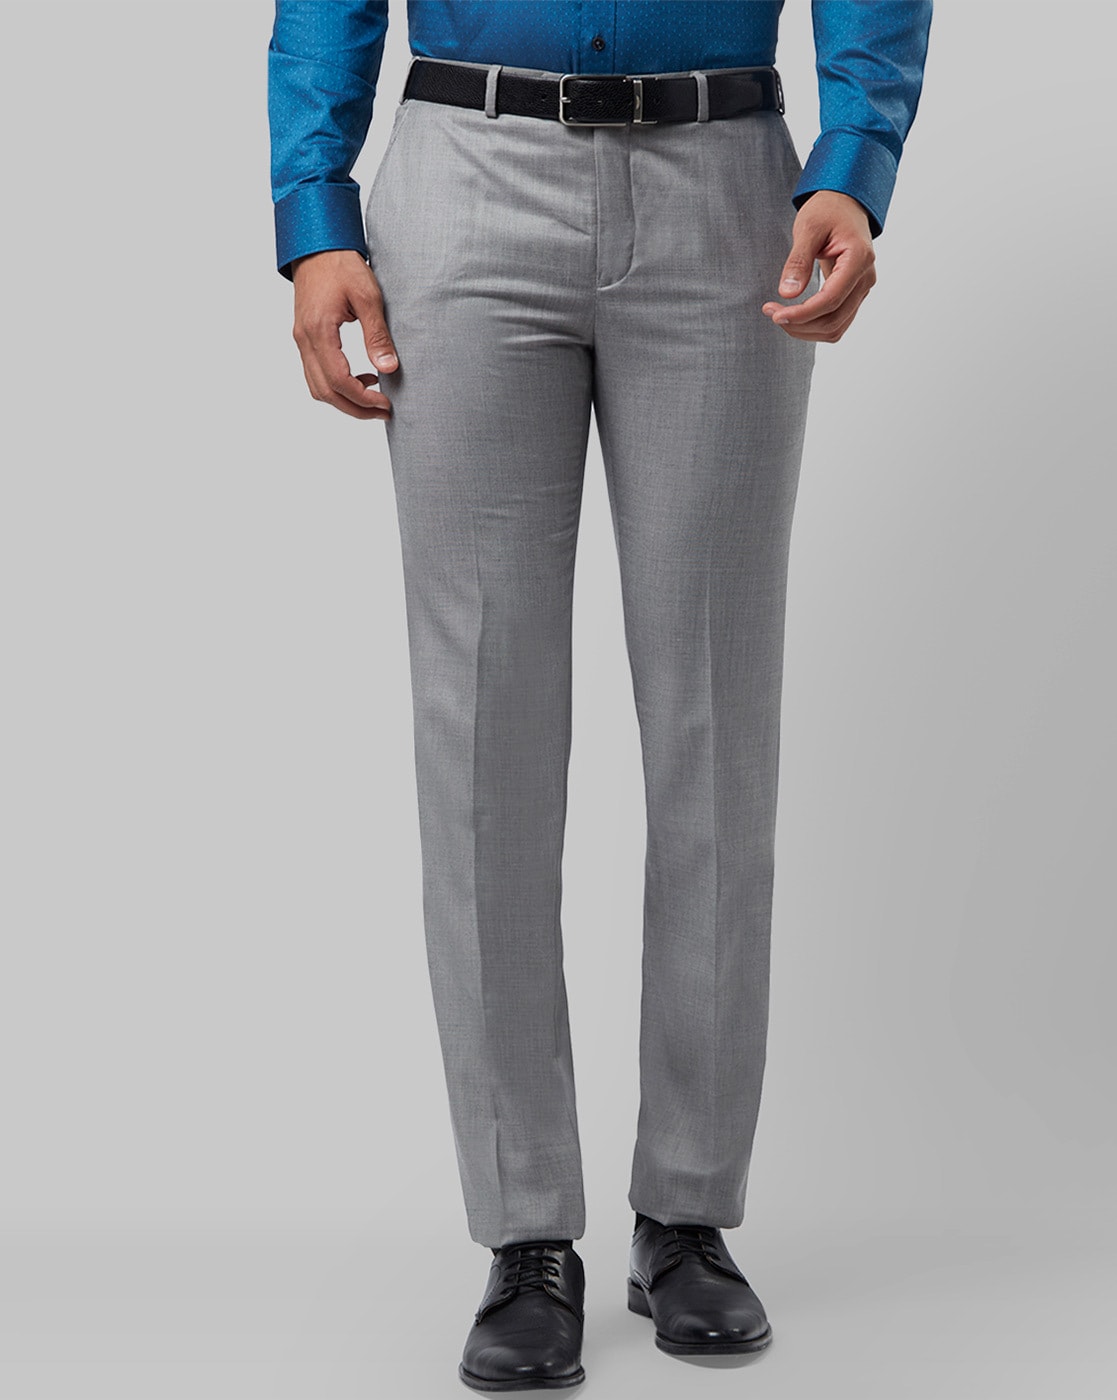 Buy Blue Trousers  Pants for Men by RAYMOND Online  Ajiocom